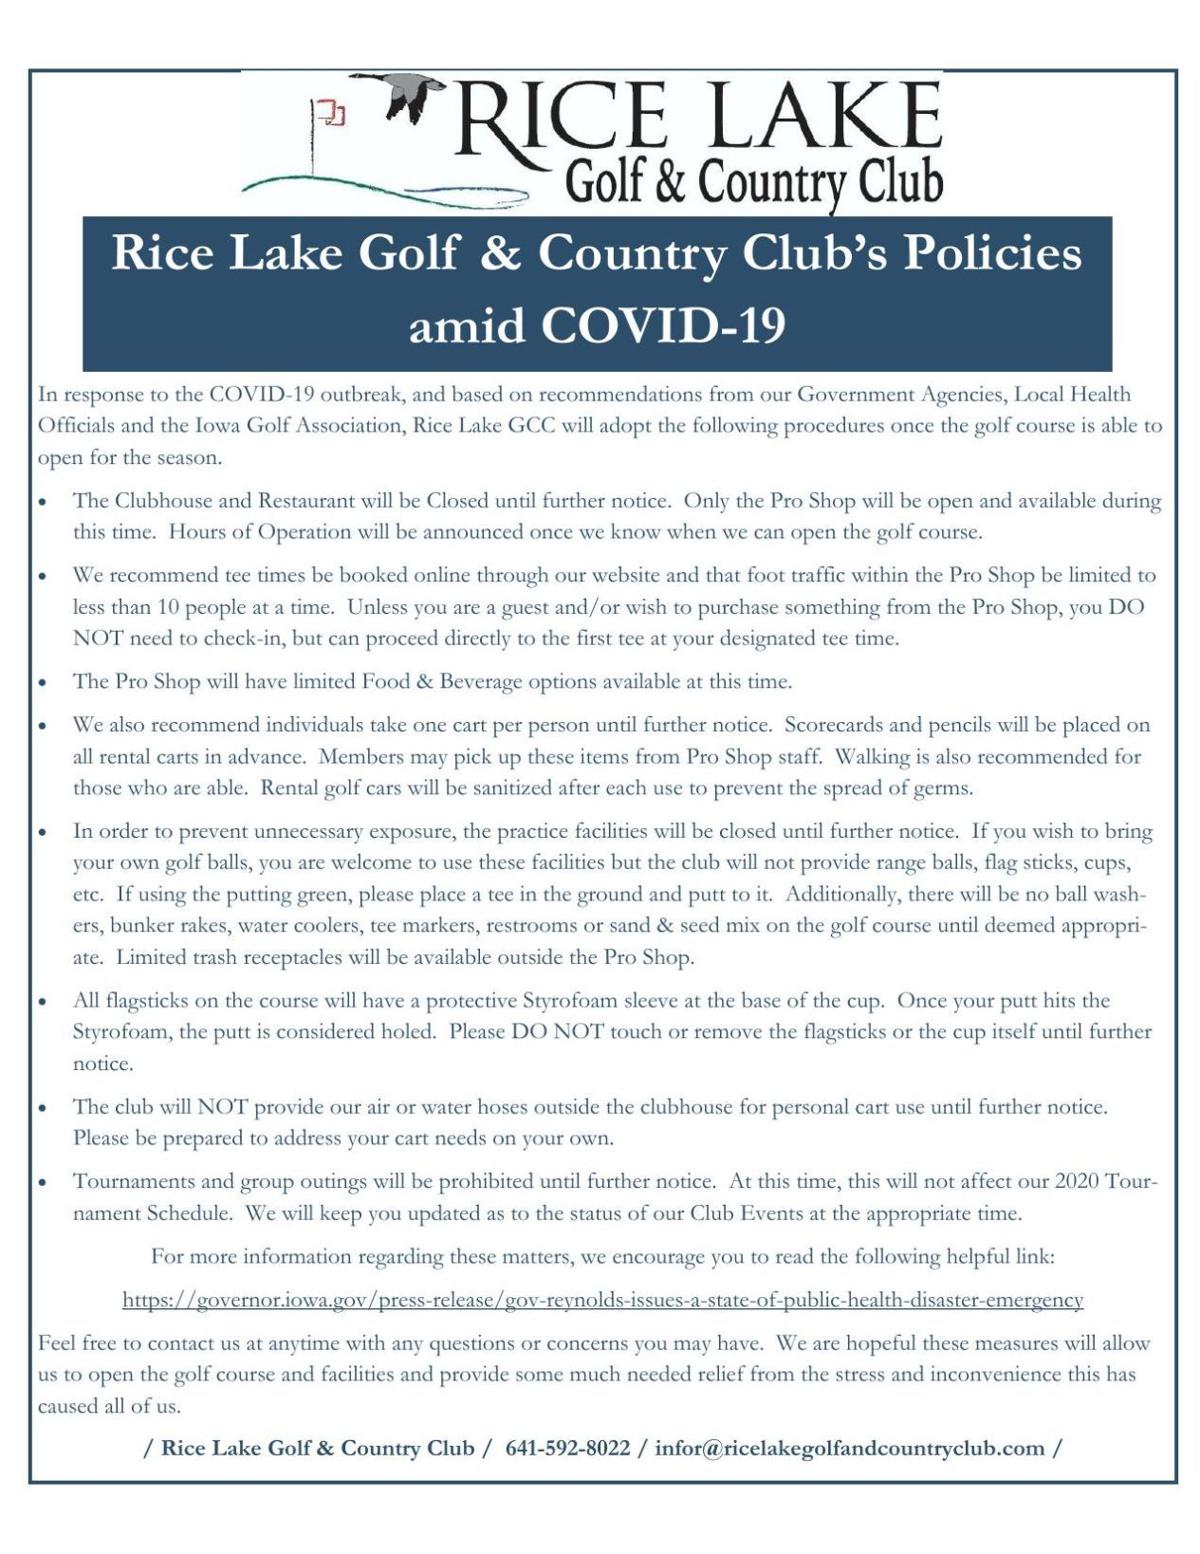 Rice Lake COVID-19 Policy